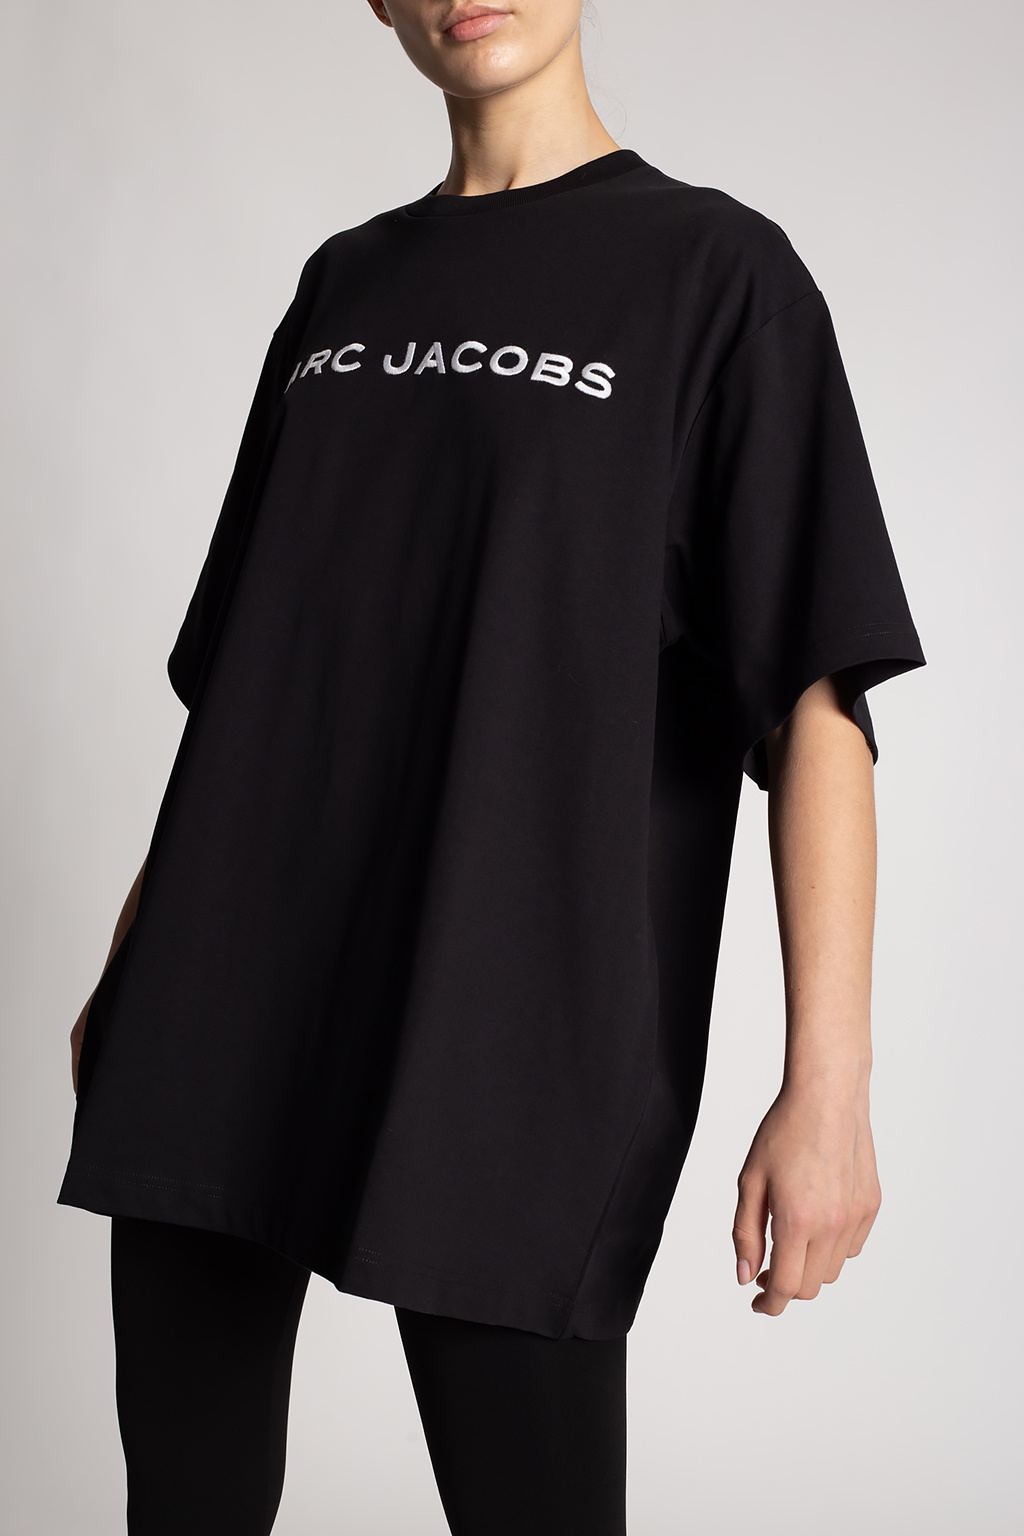 GenesinlifeShops Spain - жіноча сумка в стилі marc jacobs the snapshot bag  - Black Oversize T - shirt with logo Marc Jacobs